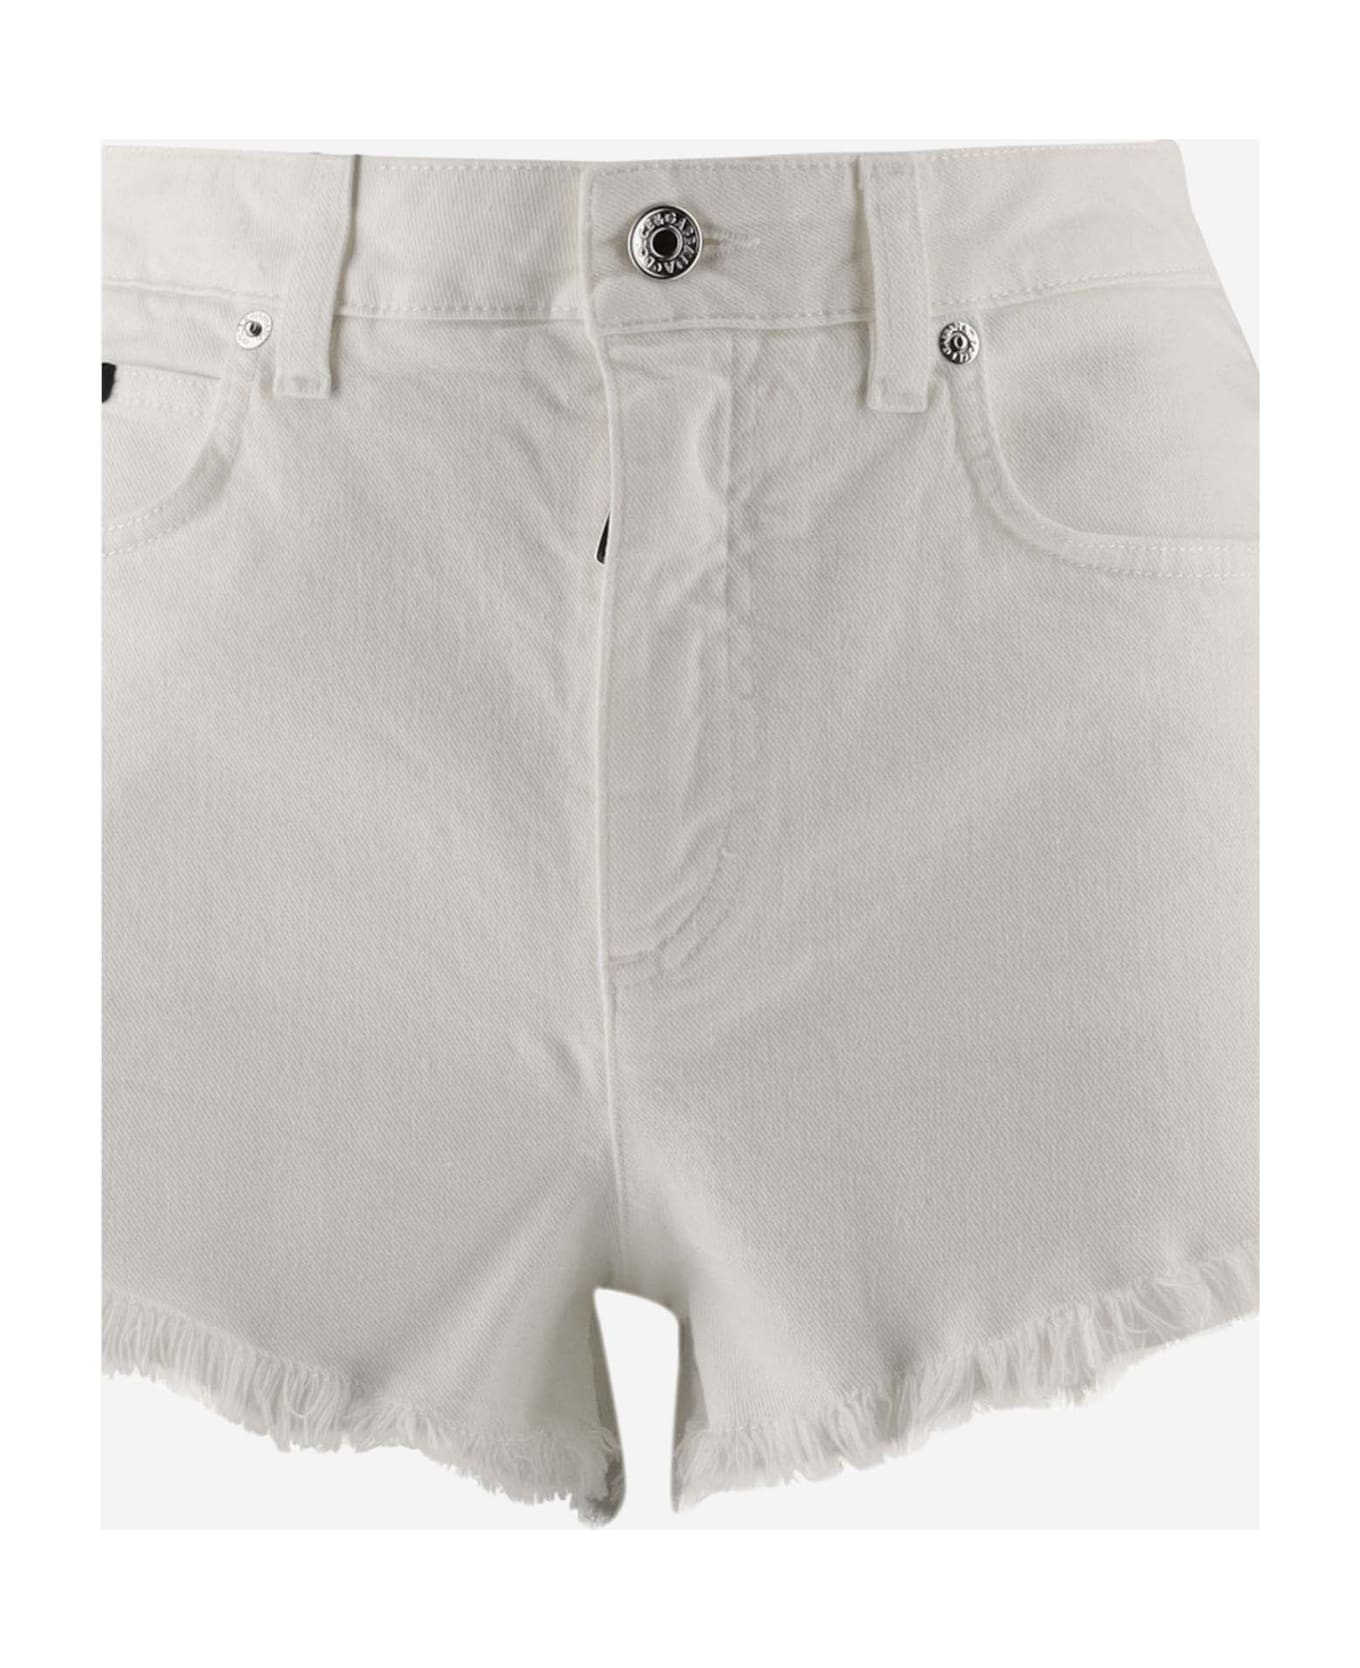 Dolce & Gabbana Denim Shorts - White